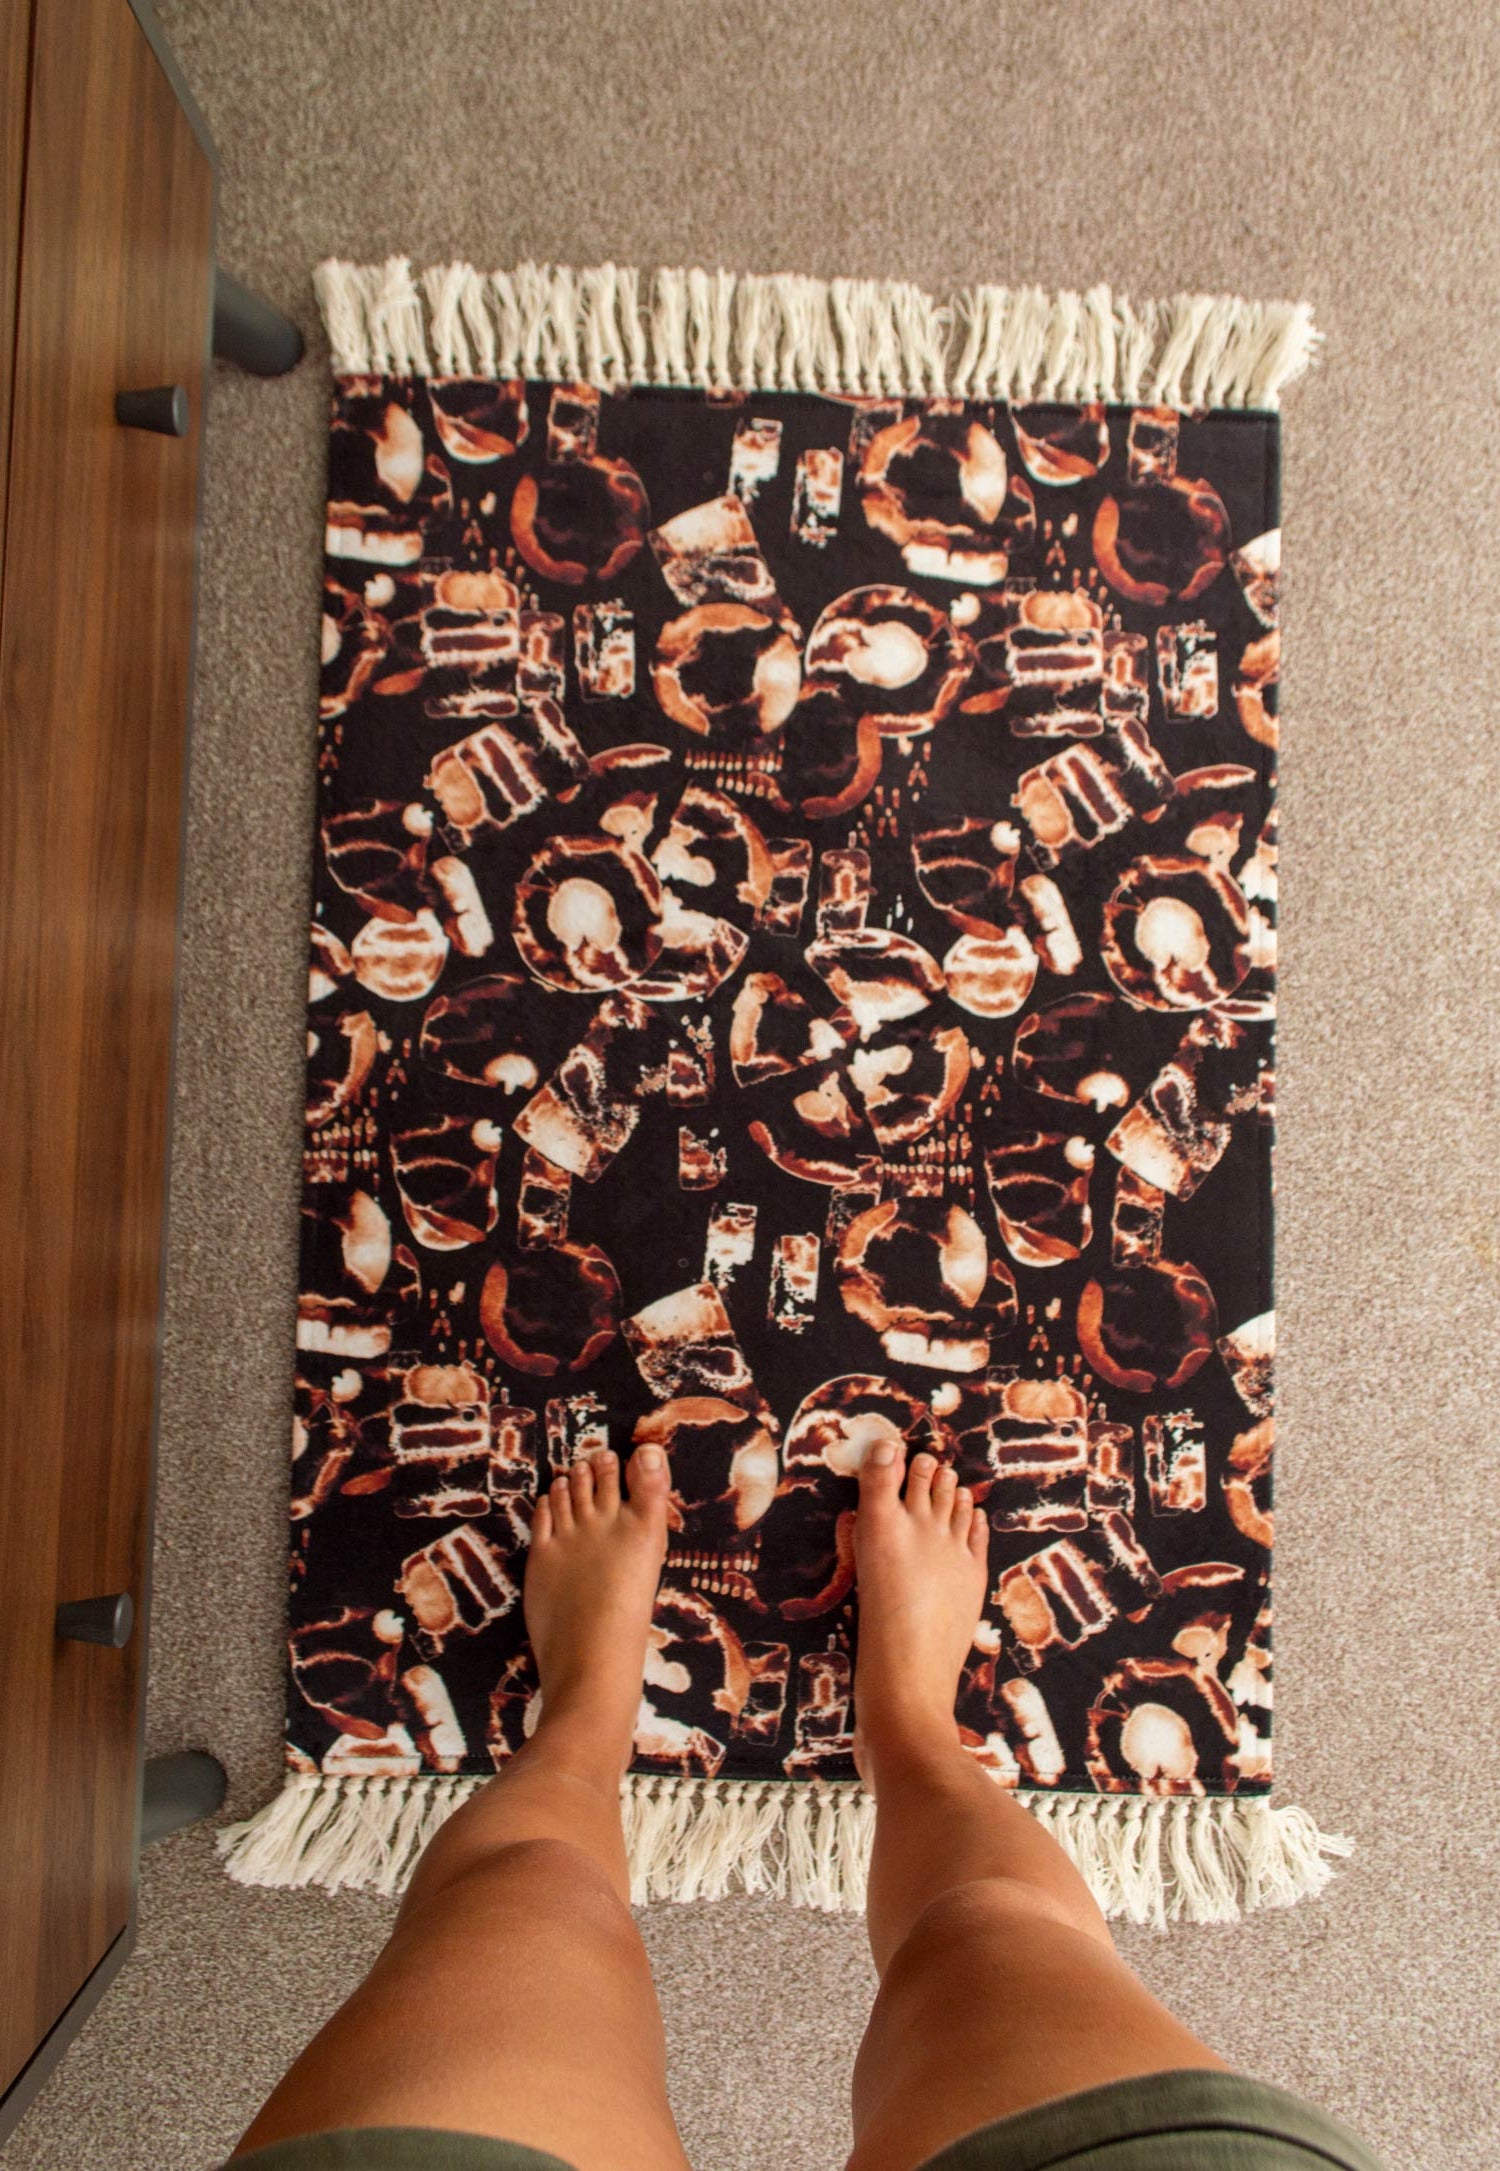 Equinox burn sienna rug product photography in bedroom